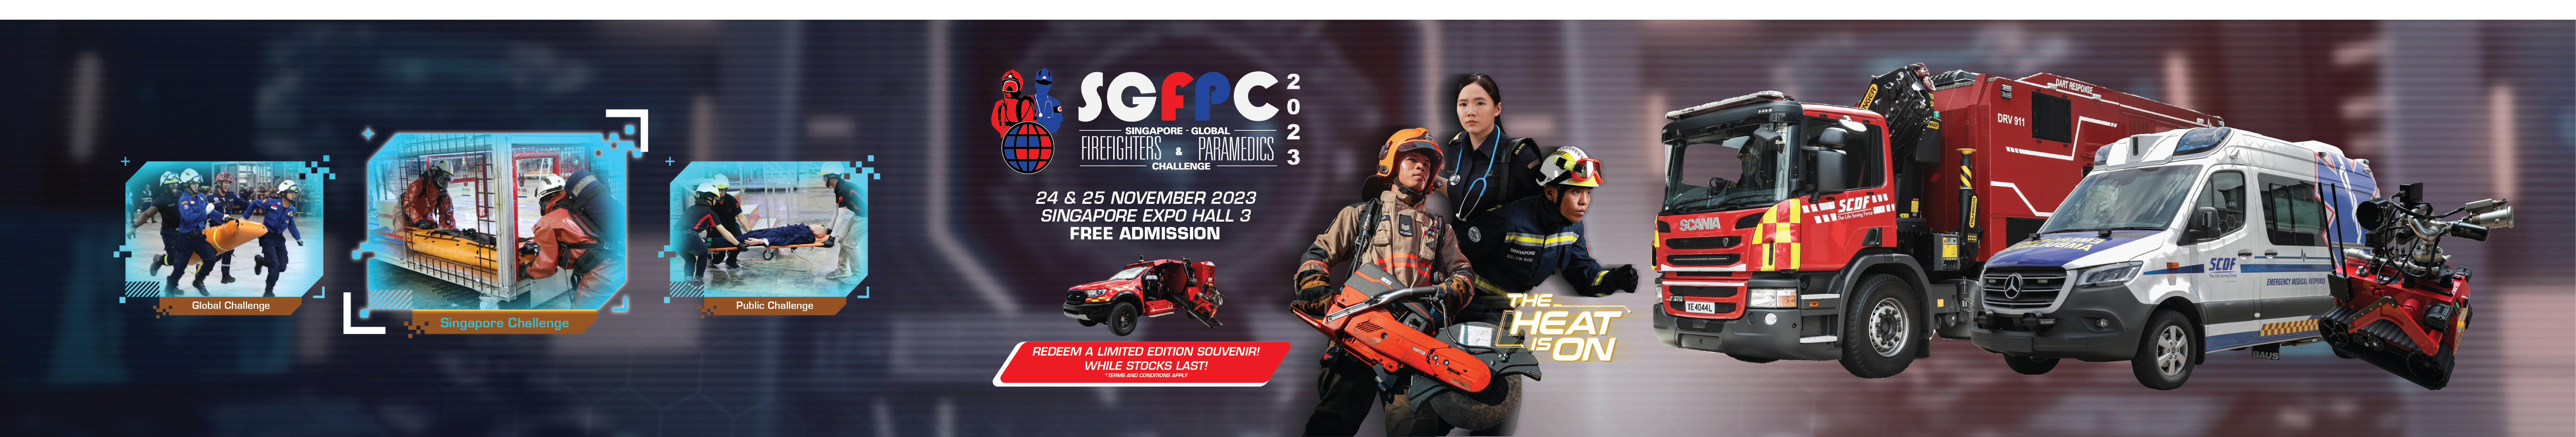 SCDF Website SGFPC Banner UPDATE 2